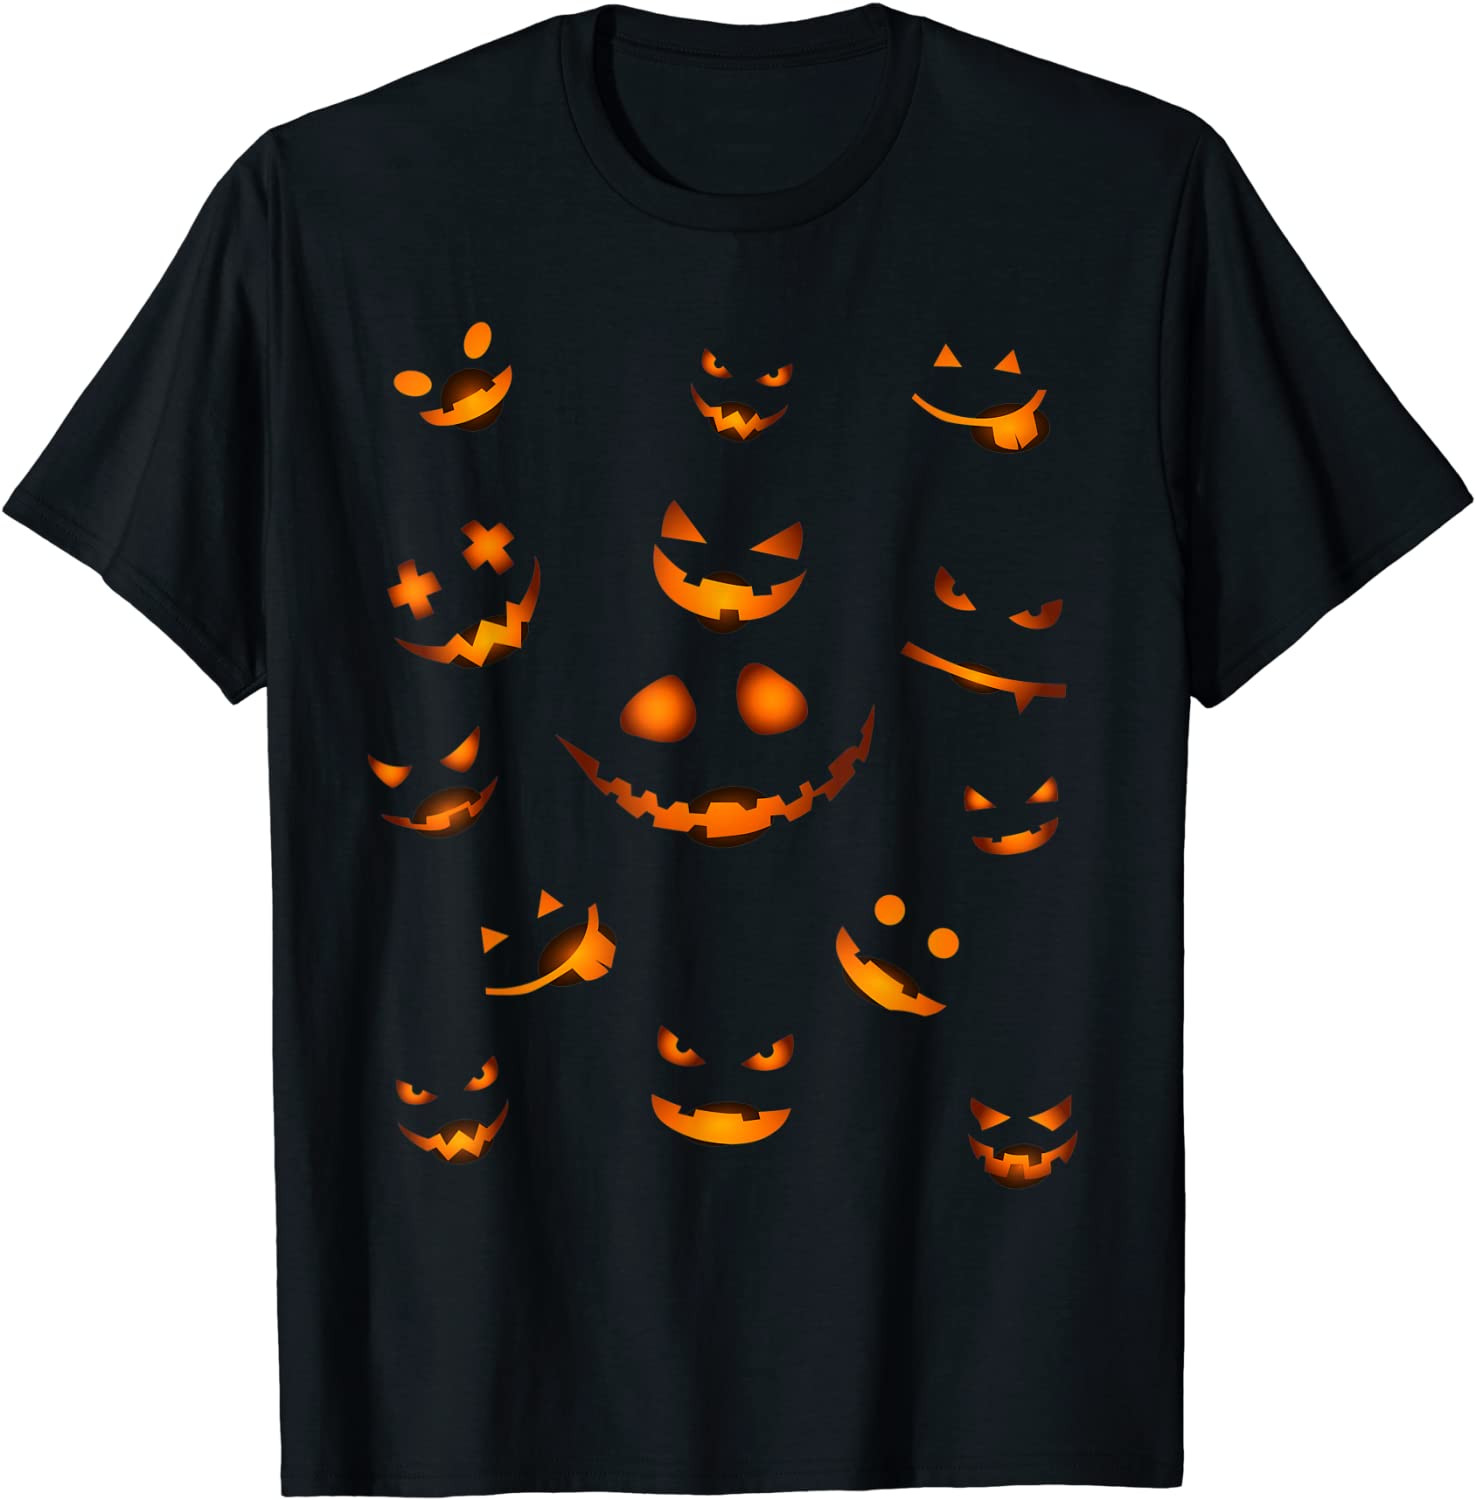 Scary Halloween Costume Jack O' Lantern Pumpkin Women Men T-Shirt